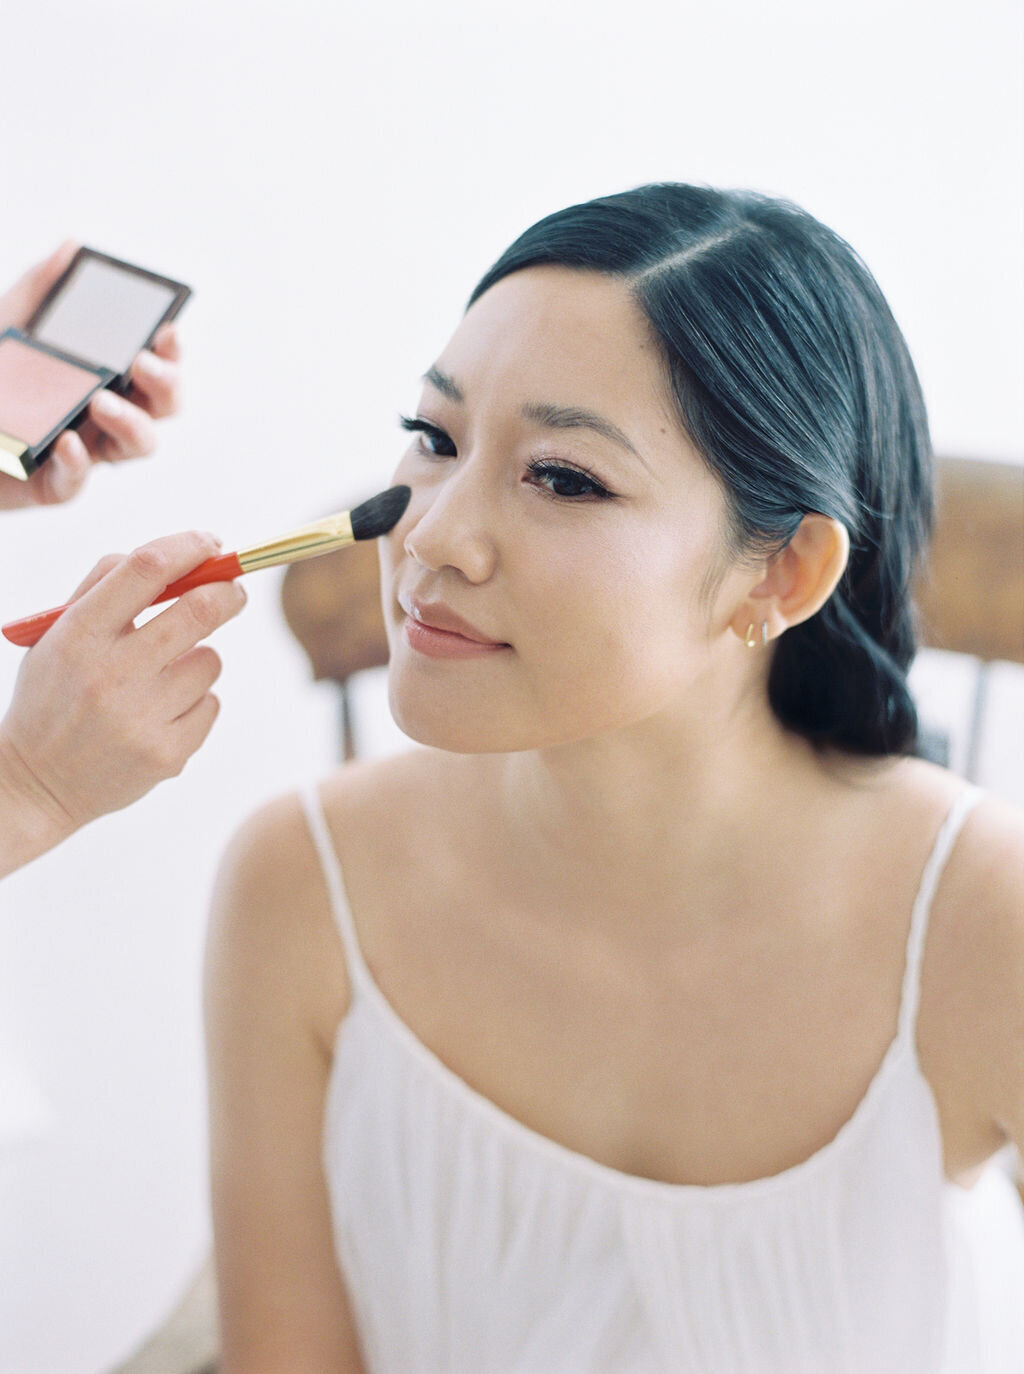 makeup artist applying blush on bride